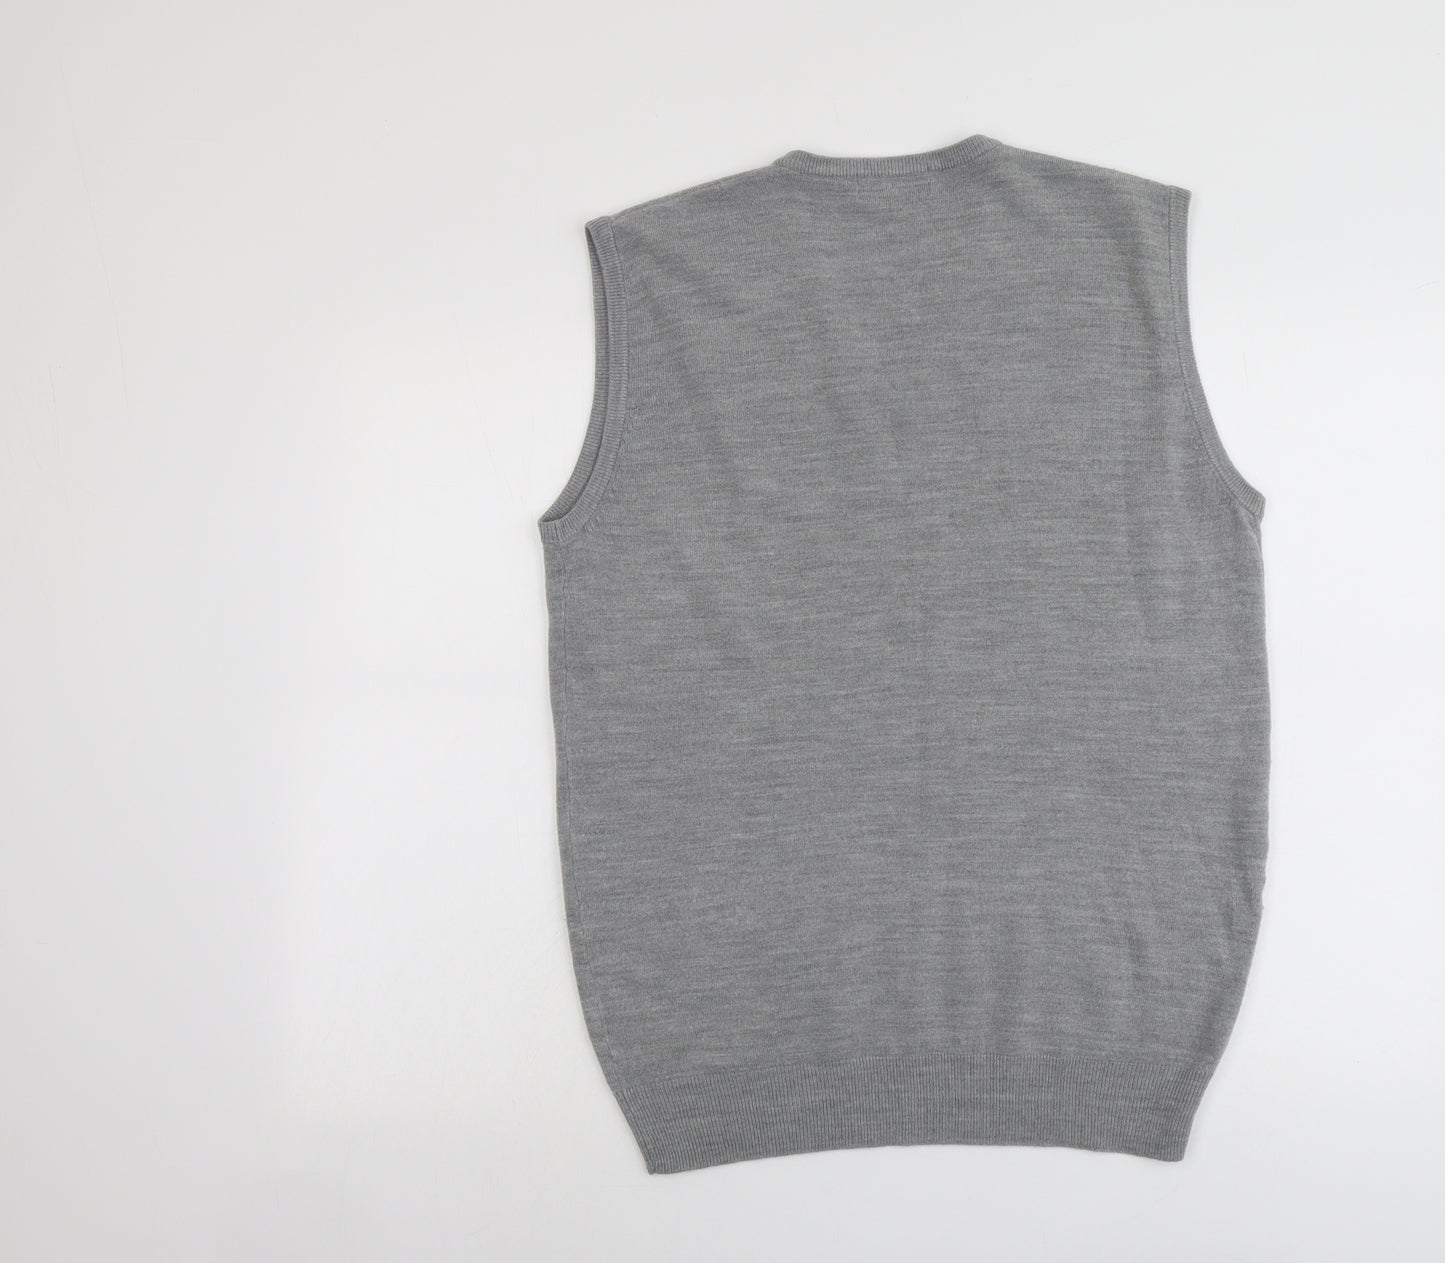 Greenwoods Mens Grey V-Neck Acrylic Vest Jumper Size M Sleeveless